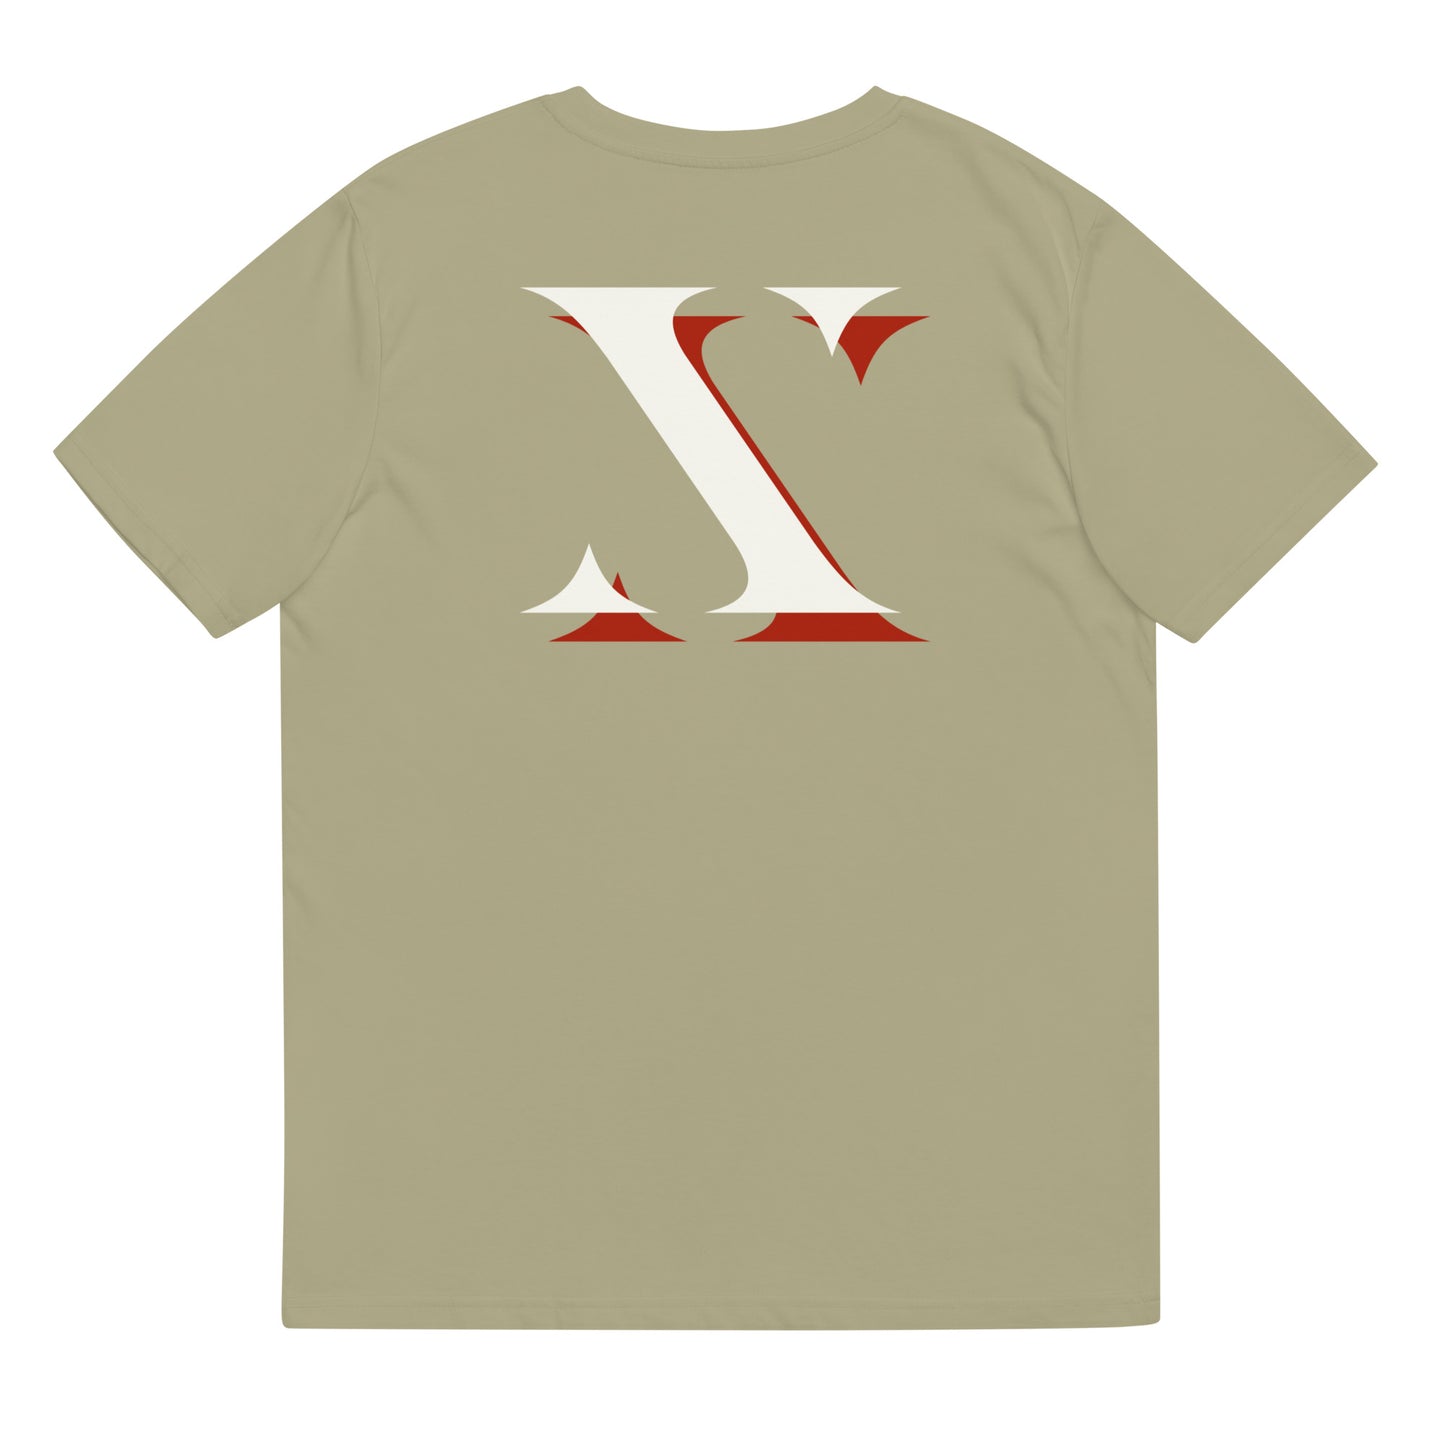 White "X" Prxphecy Unisex T-Shirt